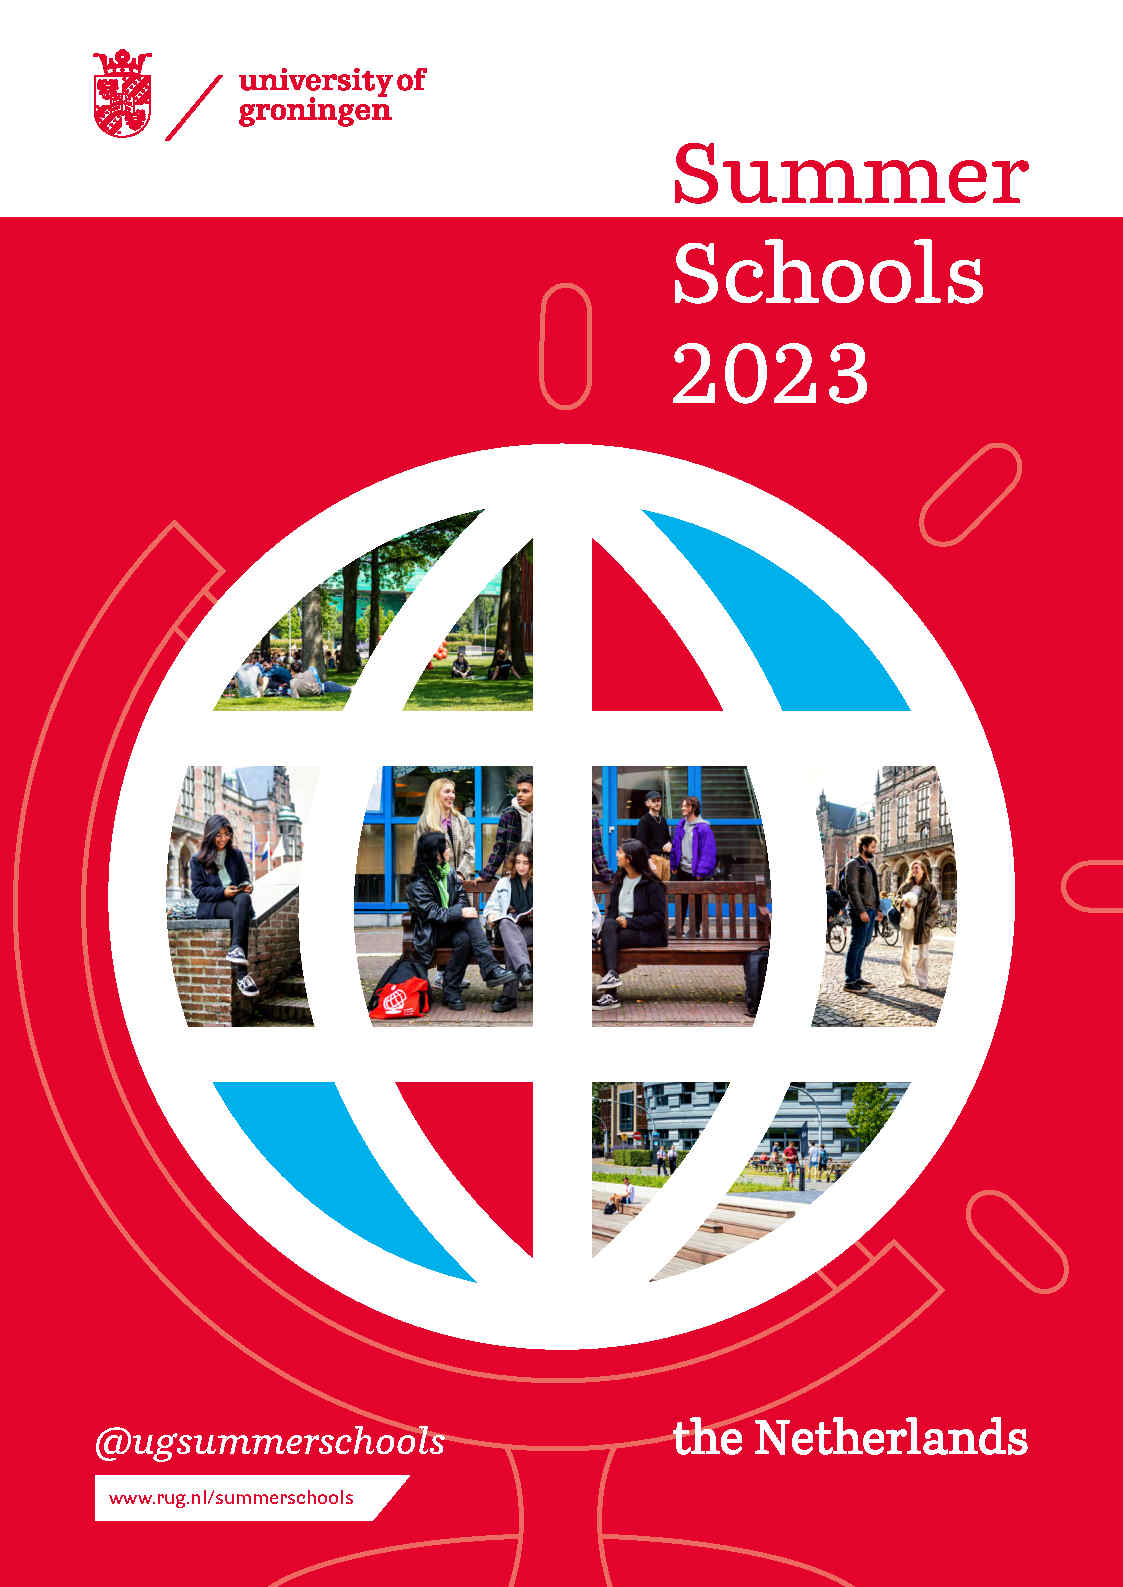 Summer schools 2023 at the University of Groningen